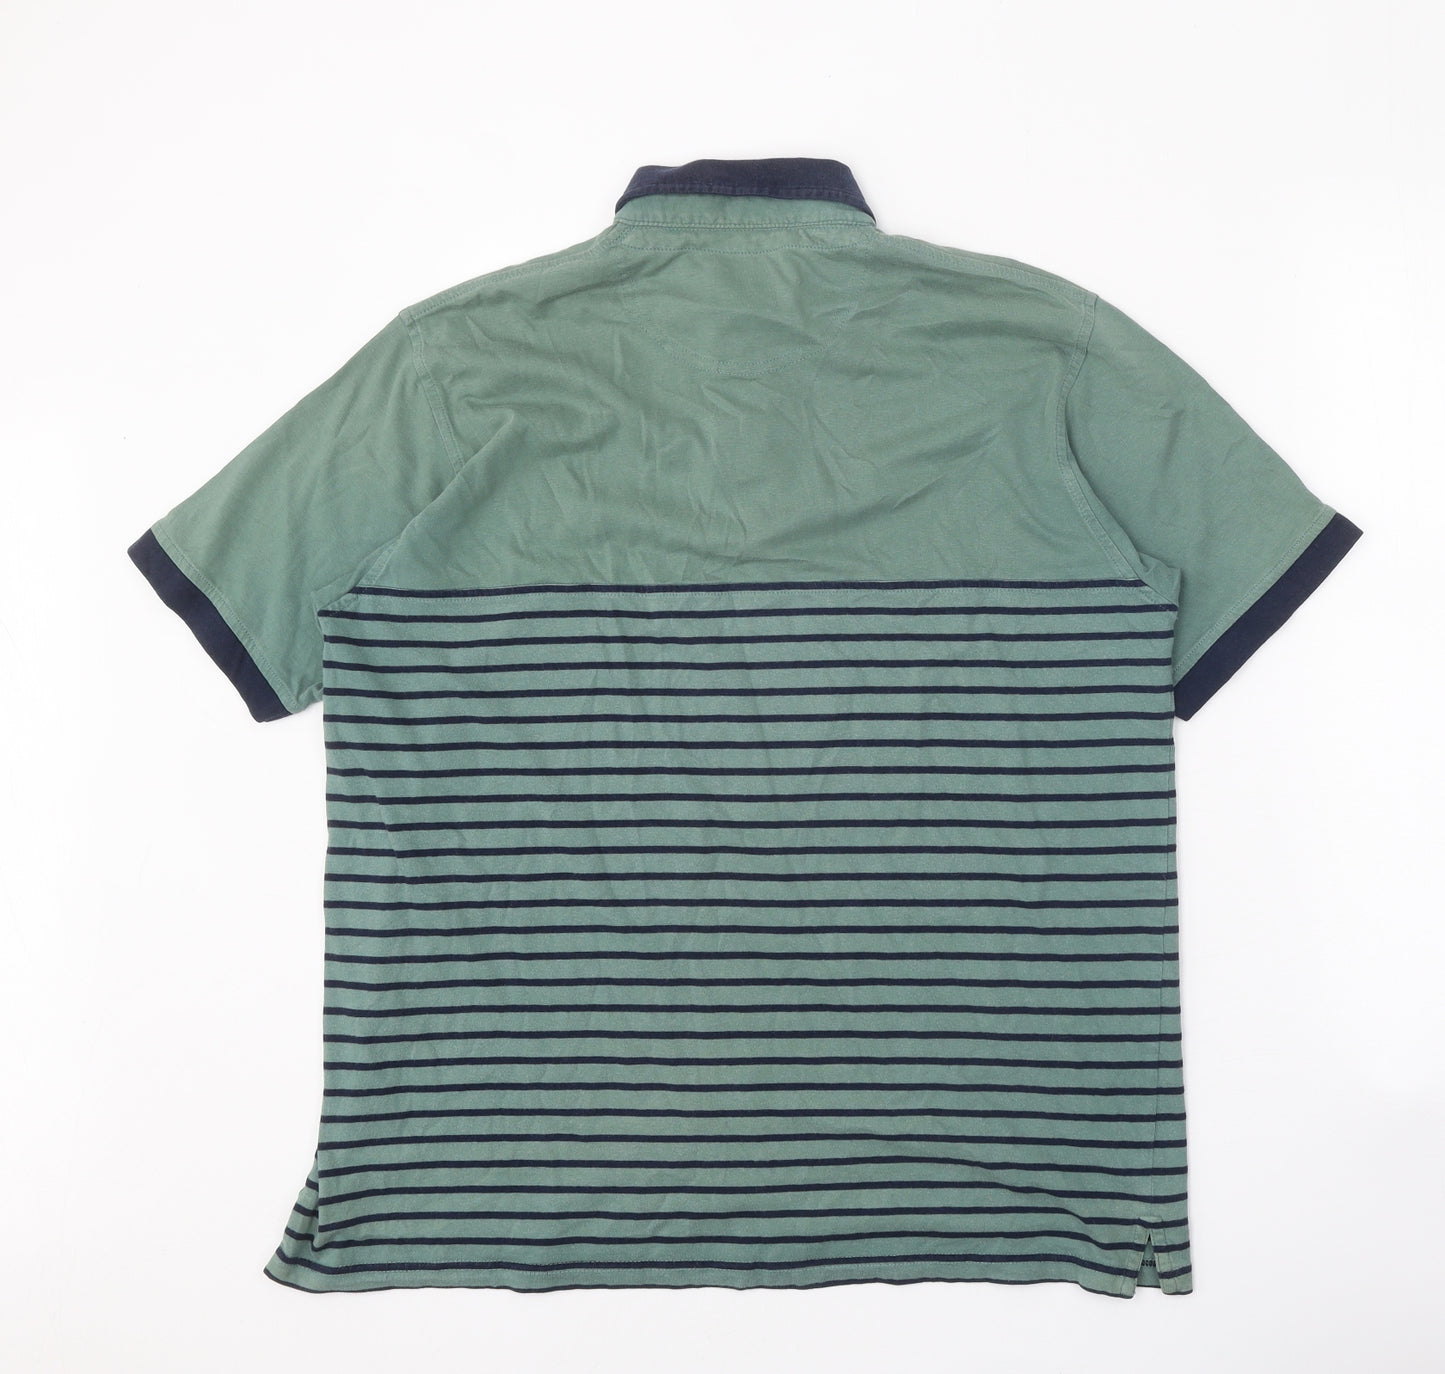 EWM Mens Green Striped 100% Cotton Polo Size M Collared Button